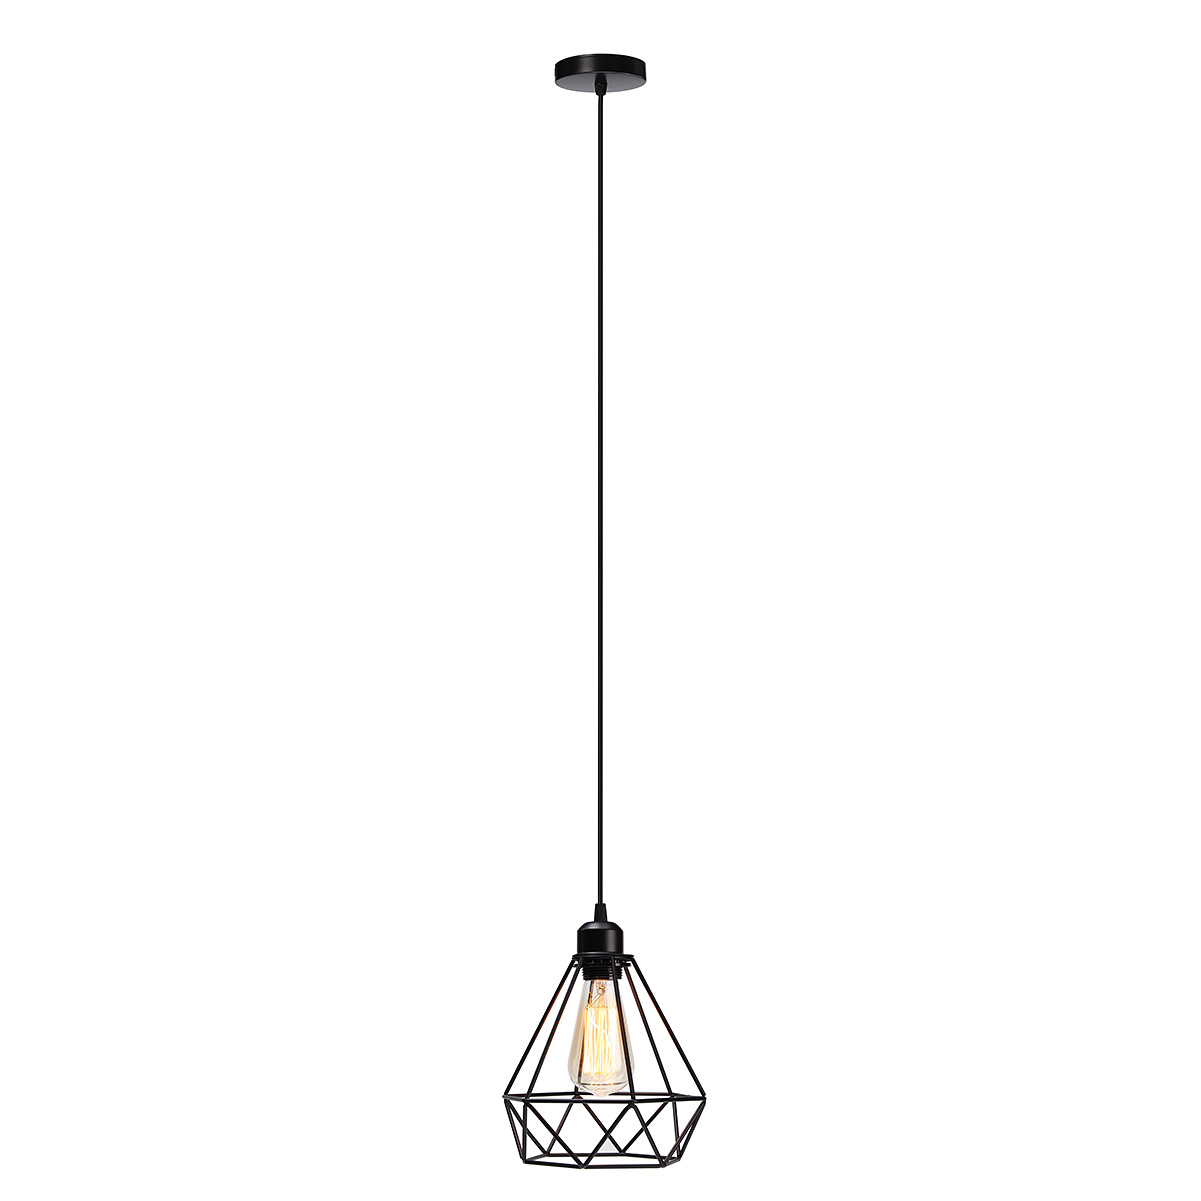 Industrial-Vintage-Metal-Cage-Hanging-Ceiling-Pendant-Lamp-Lighting-Holder-Shade-1534598-3